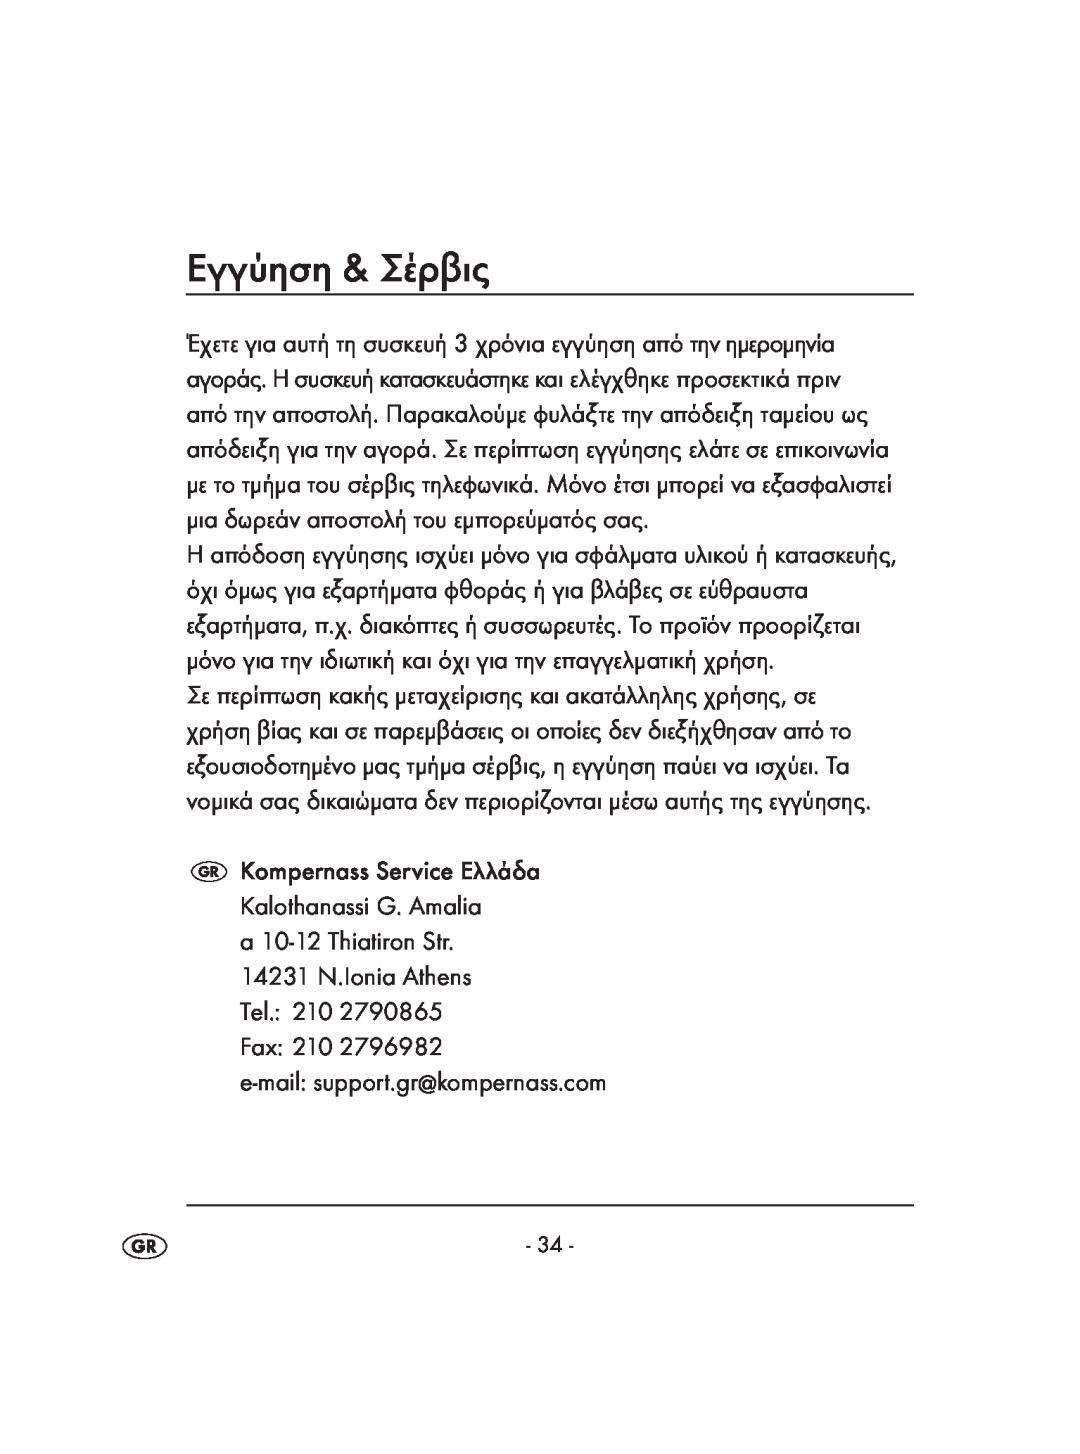 Kompernass KH 4083 manual Εγγύηση & Σέρβις, Kompernass Service Eλλάδα Kalothanassi G. Amalia, α10-12Thiatiron Str 